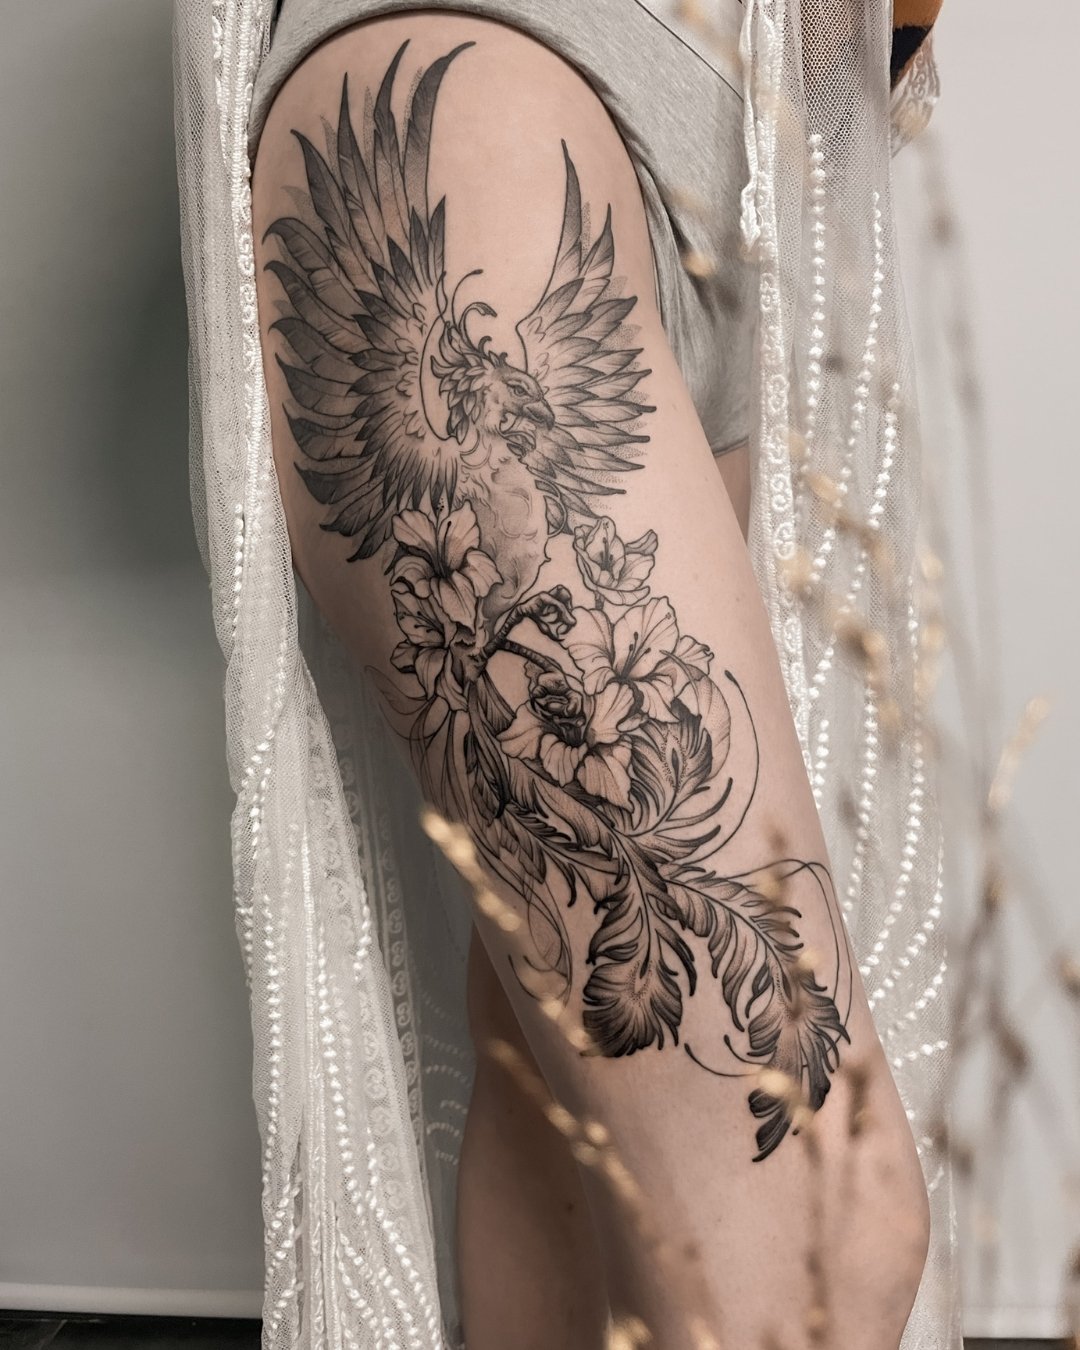 Un ph&oelig;nix et du floral par @vulpera_ 🐦&zwj;🔥
&bull;
Merci Ga&euml;lle pour ta confiance pour ce gros projet 🌿
&bull;
&bull;
&bull;
#floraltattoo #phenixtattoo #tattoo #tatouage #ink #inked #lyontattoo #tatoueuse #vulpera #lyon